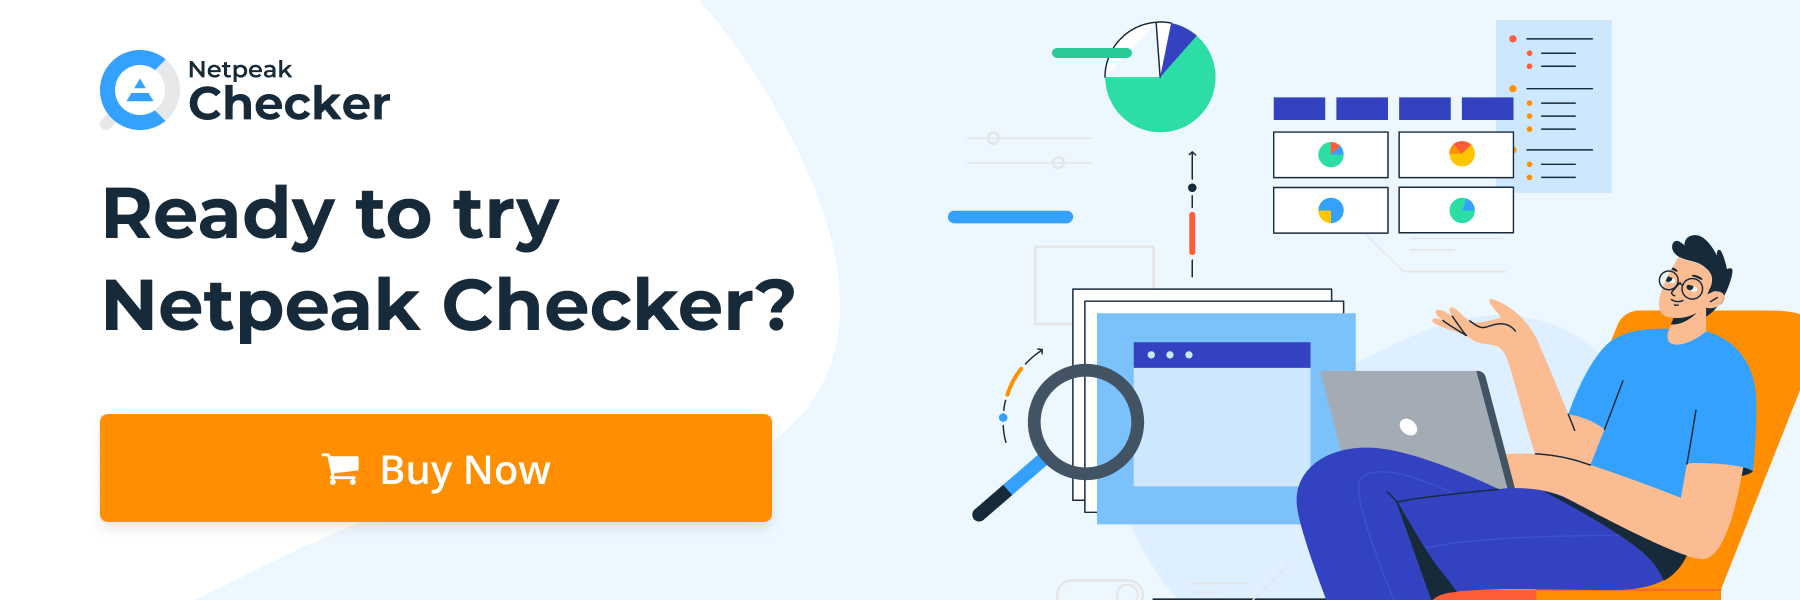 Buy Netpeak Checker Now